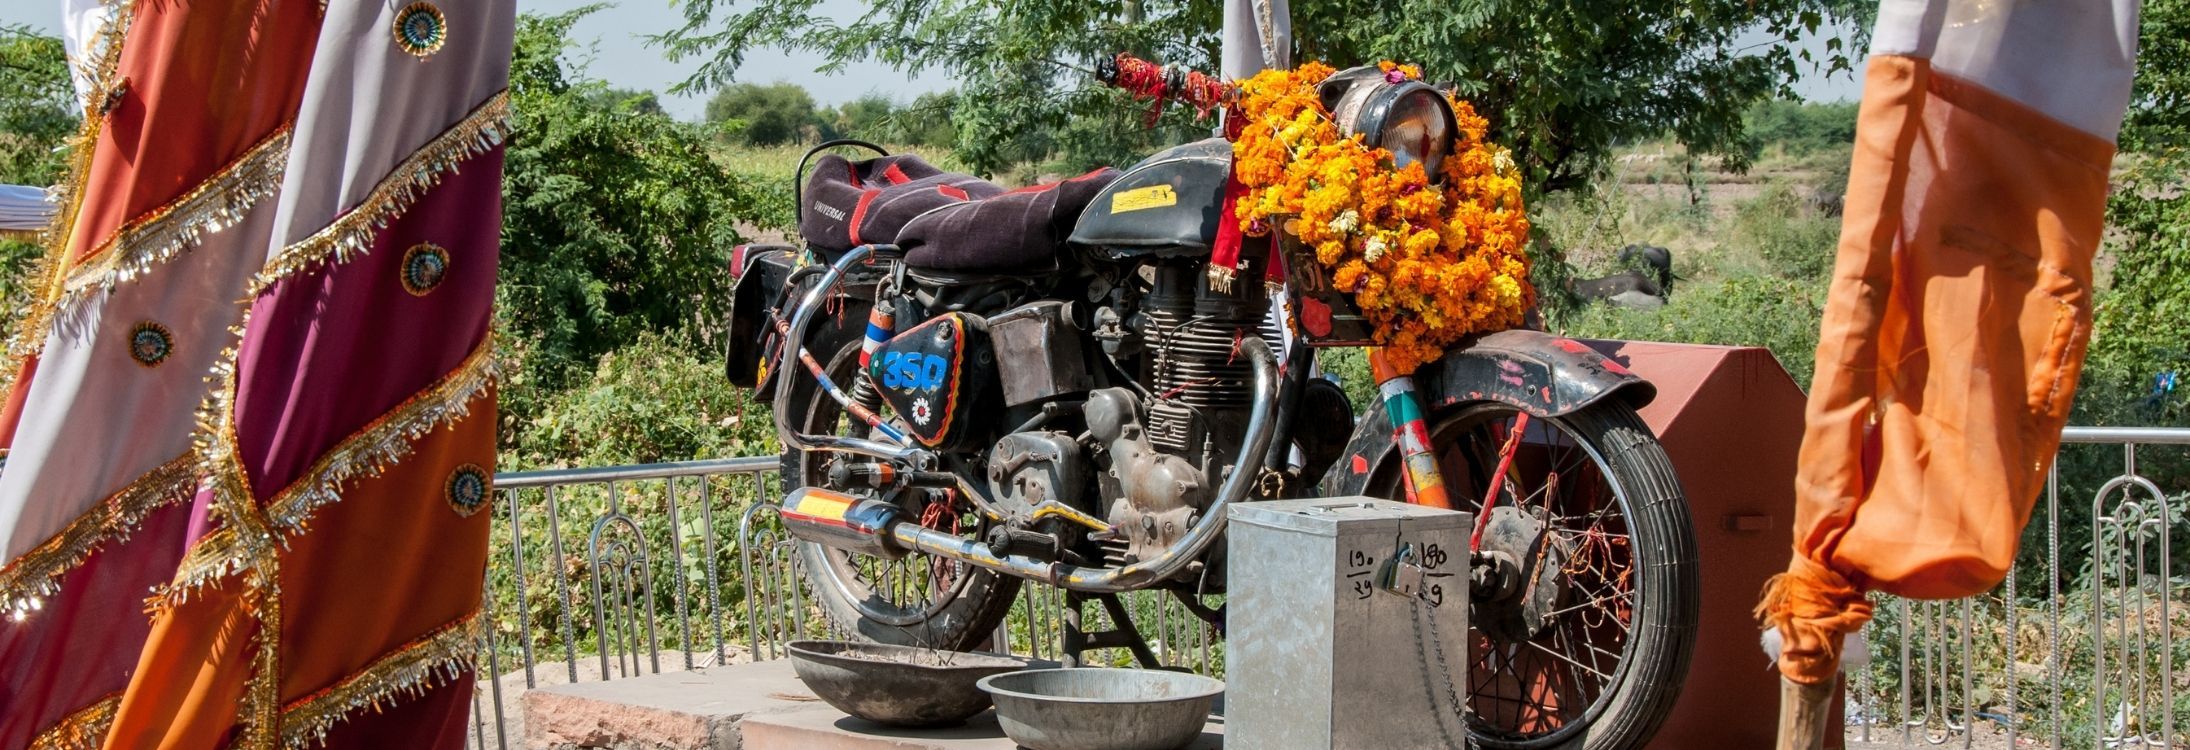 Motorcycle God - Bullet Baba Shrine, Rajasthan